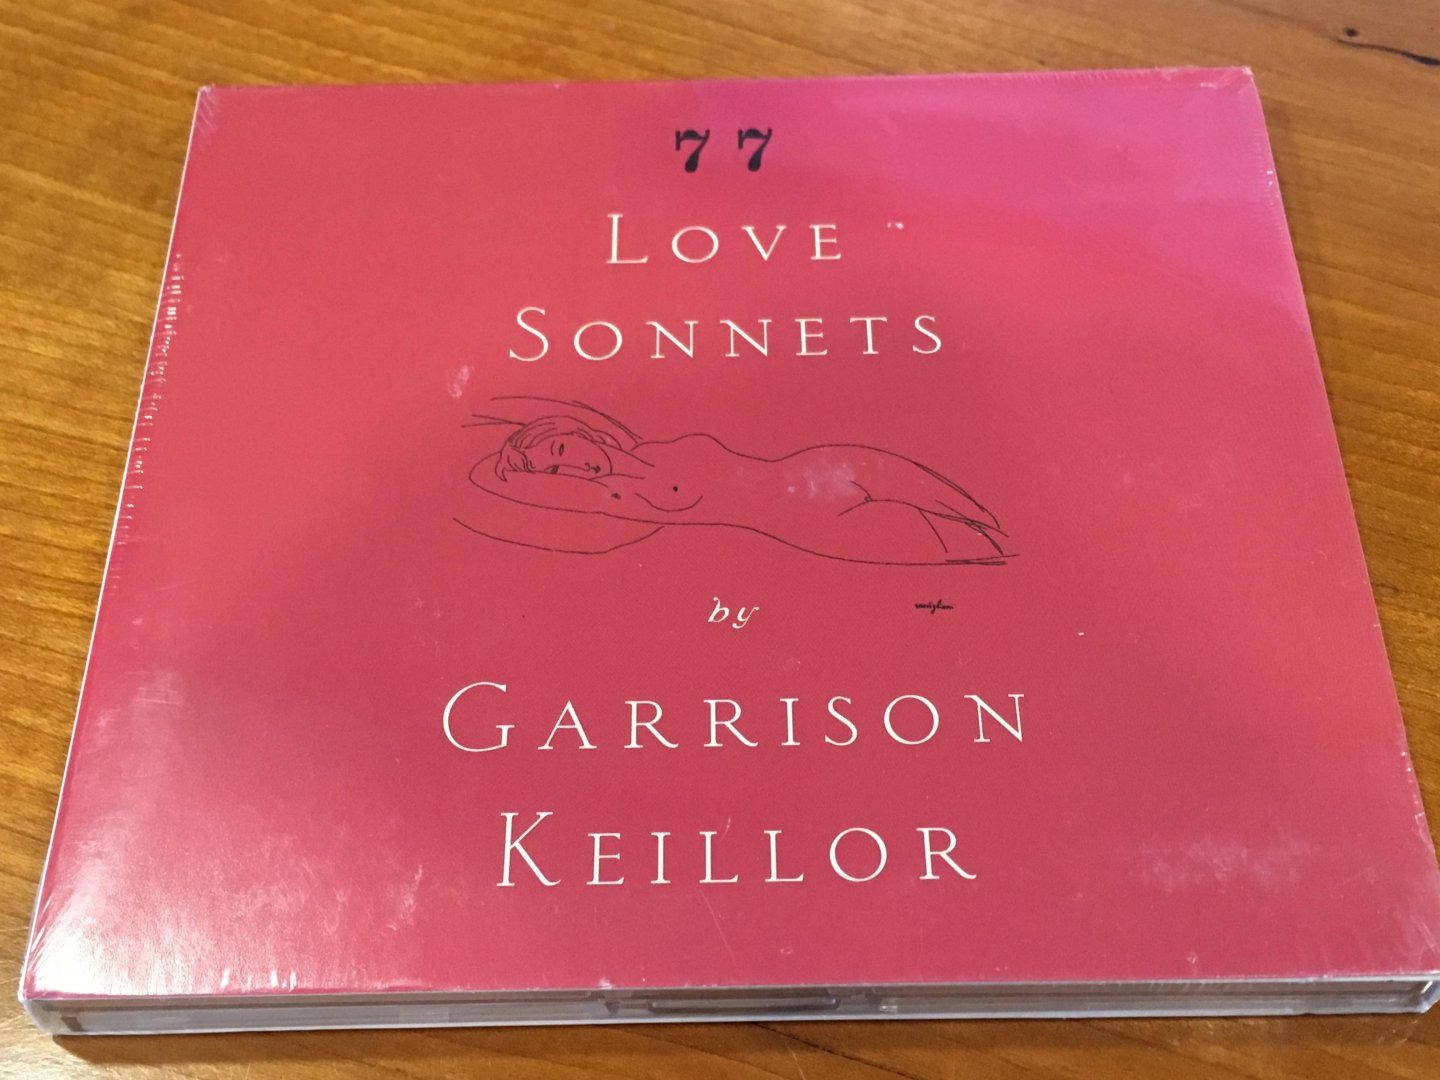 Keillor, Garrison - 77 Love Sonnets